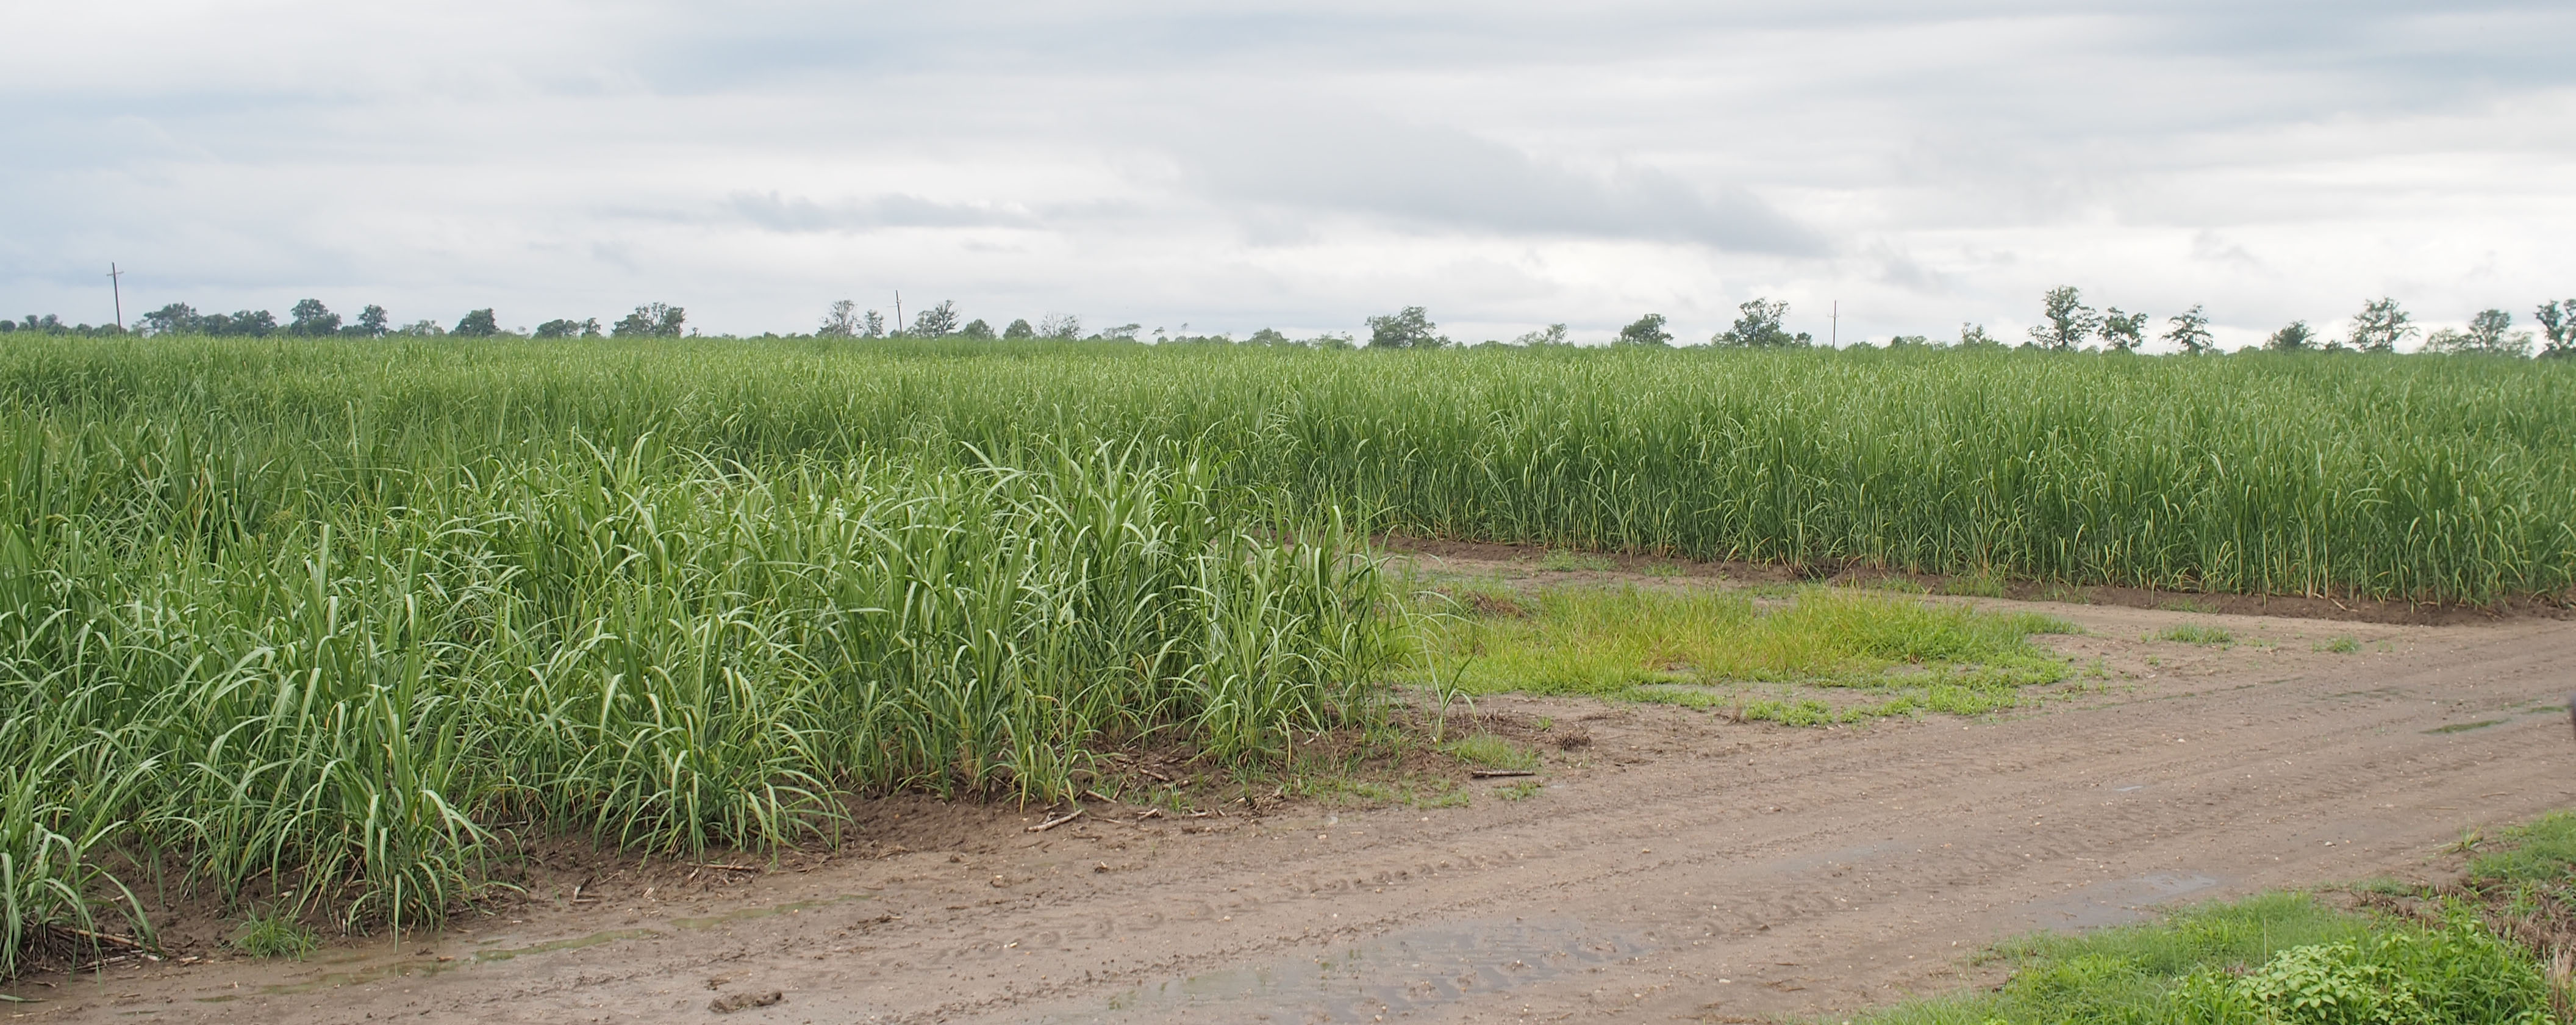 Pointe Coupee 2018 sugarcane fields